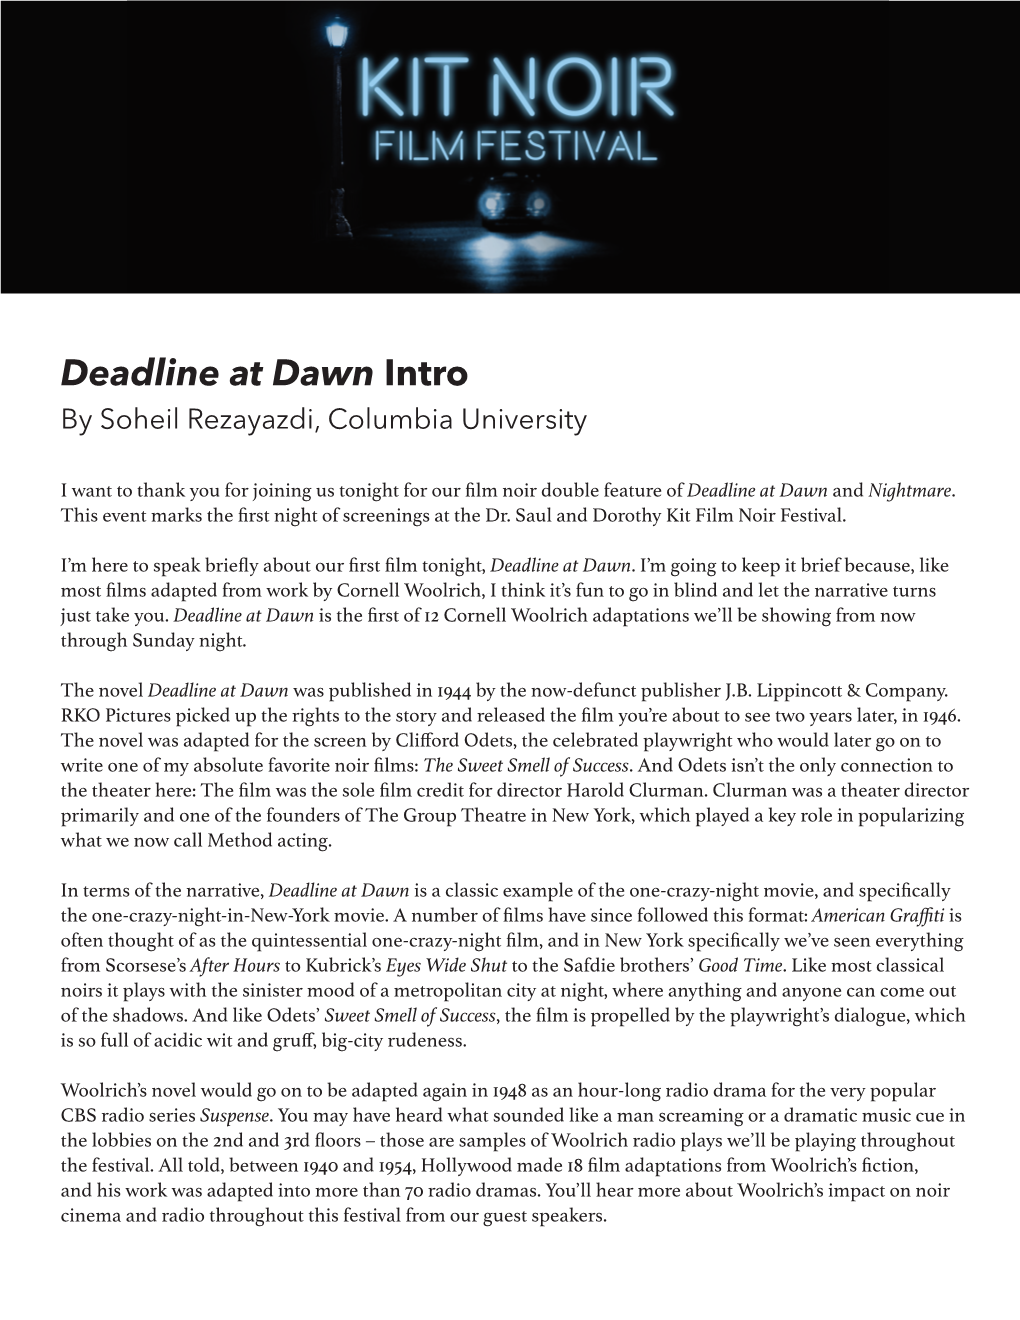 Deadline at Dawn Intro by Soheil Rezayazdi, Columbia University